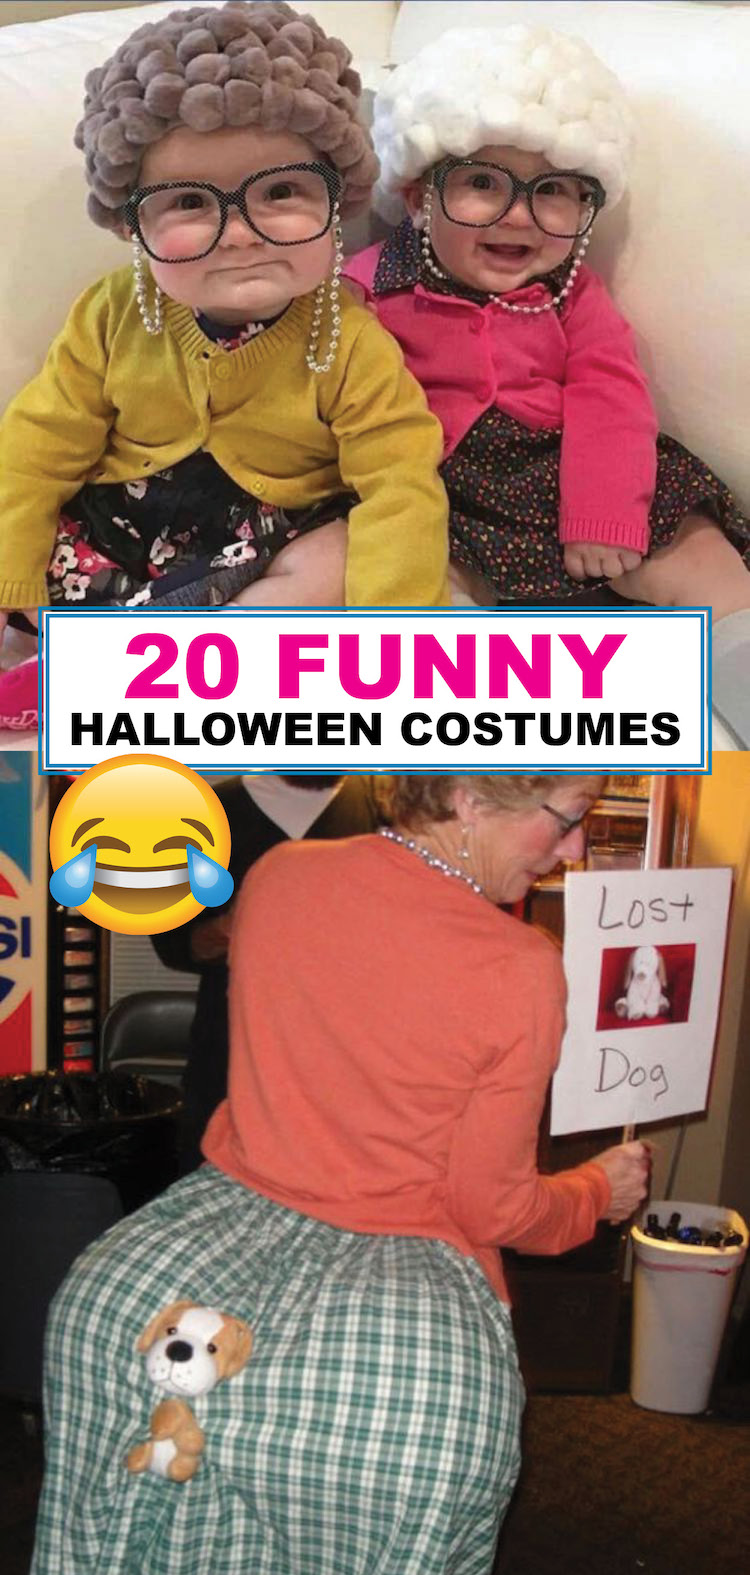 20 Funny Halloween Costumes